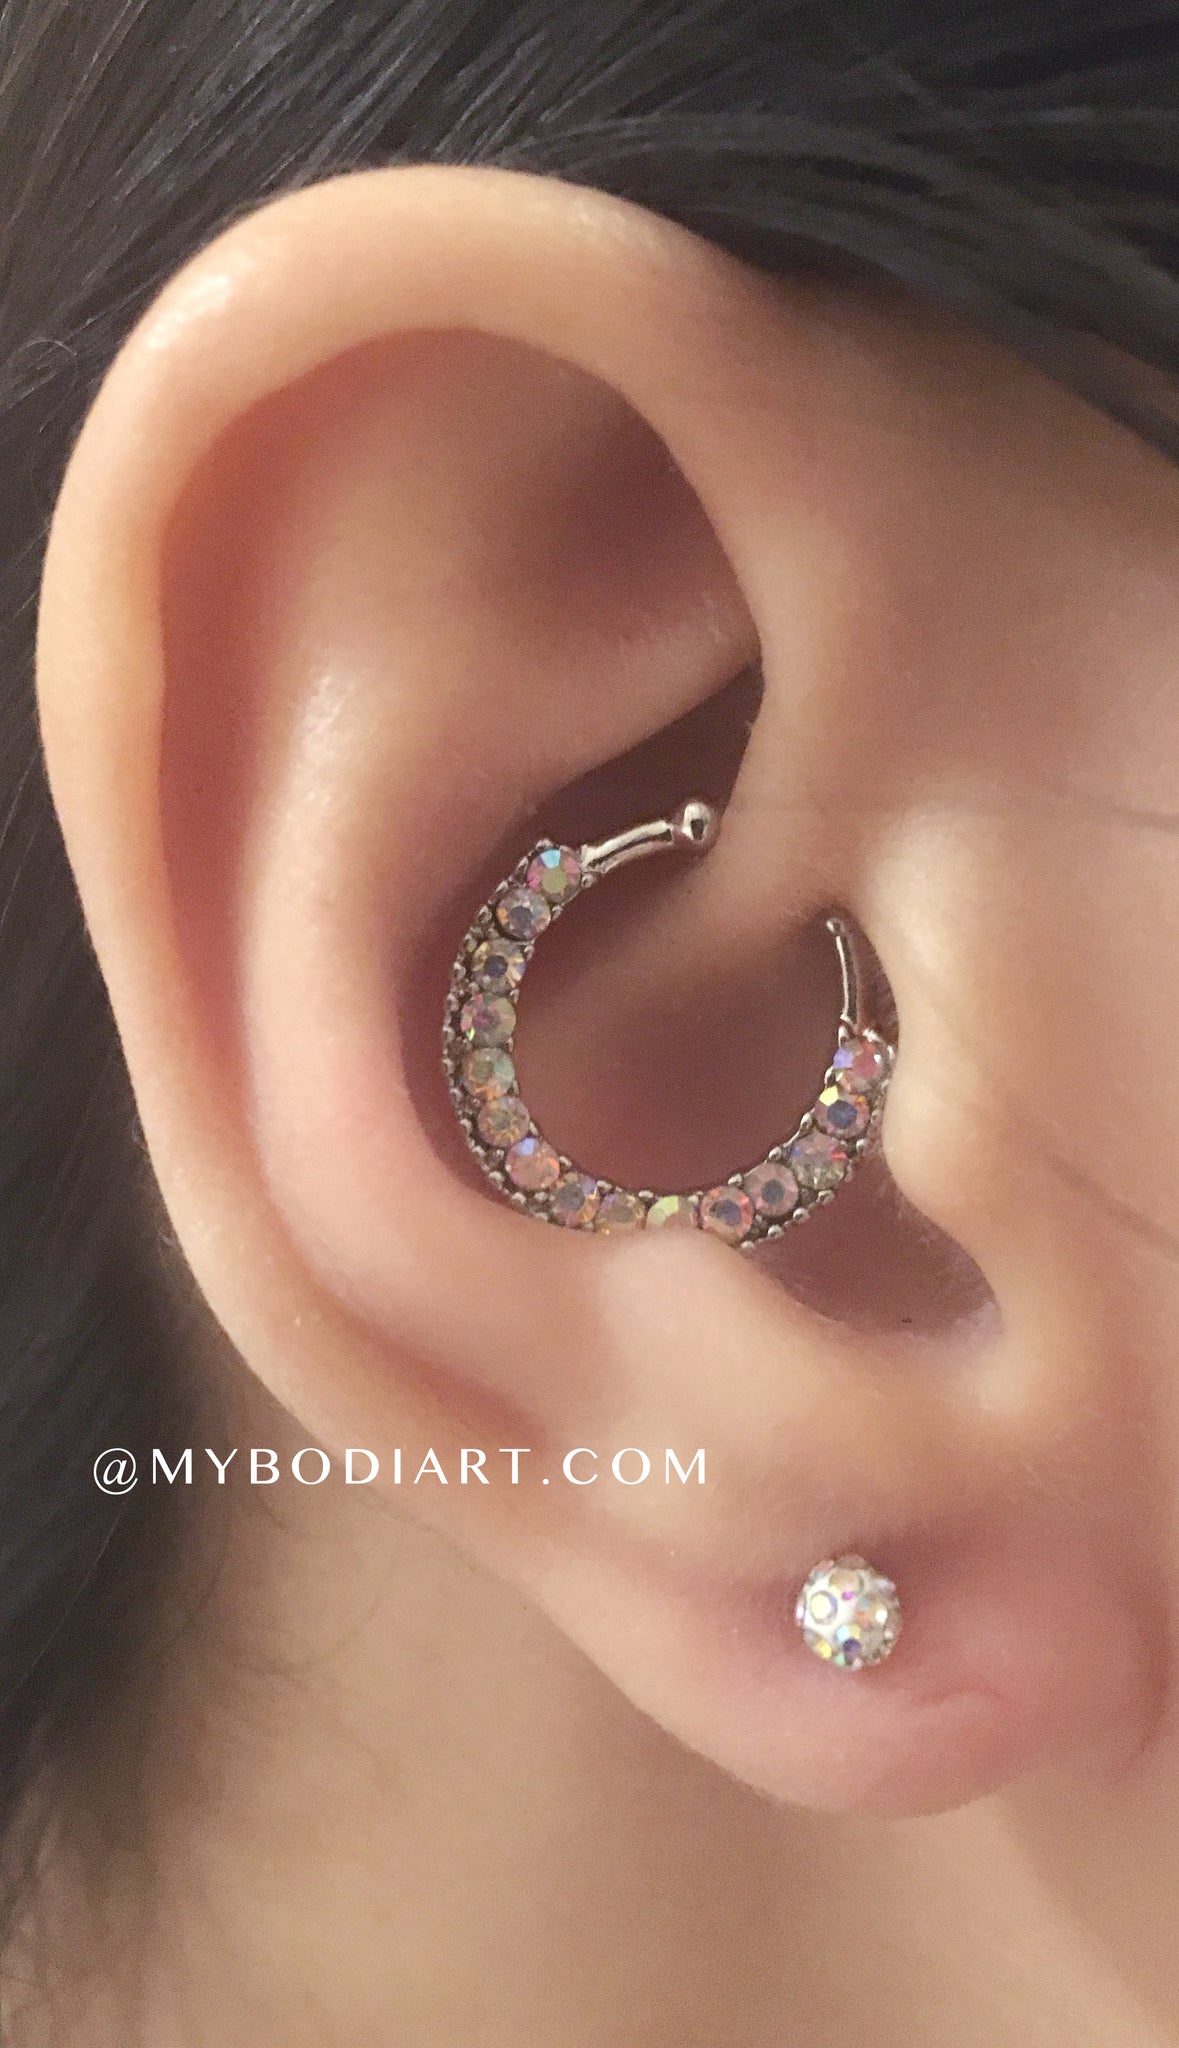 Adorable Girly Ear Piercing Ideas for Teenage Girls - la perforación del oído ideas chicas - www.MyBodiArt.com